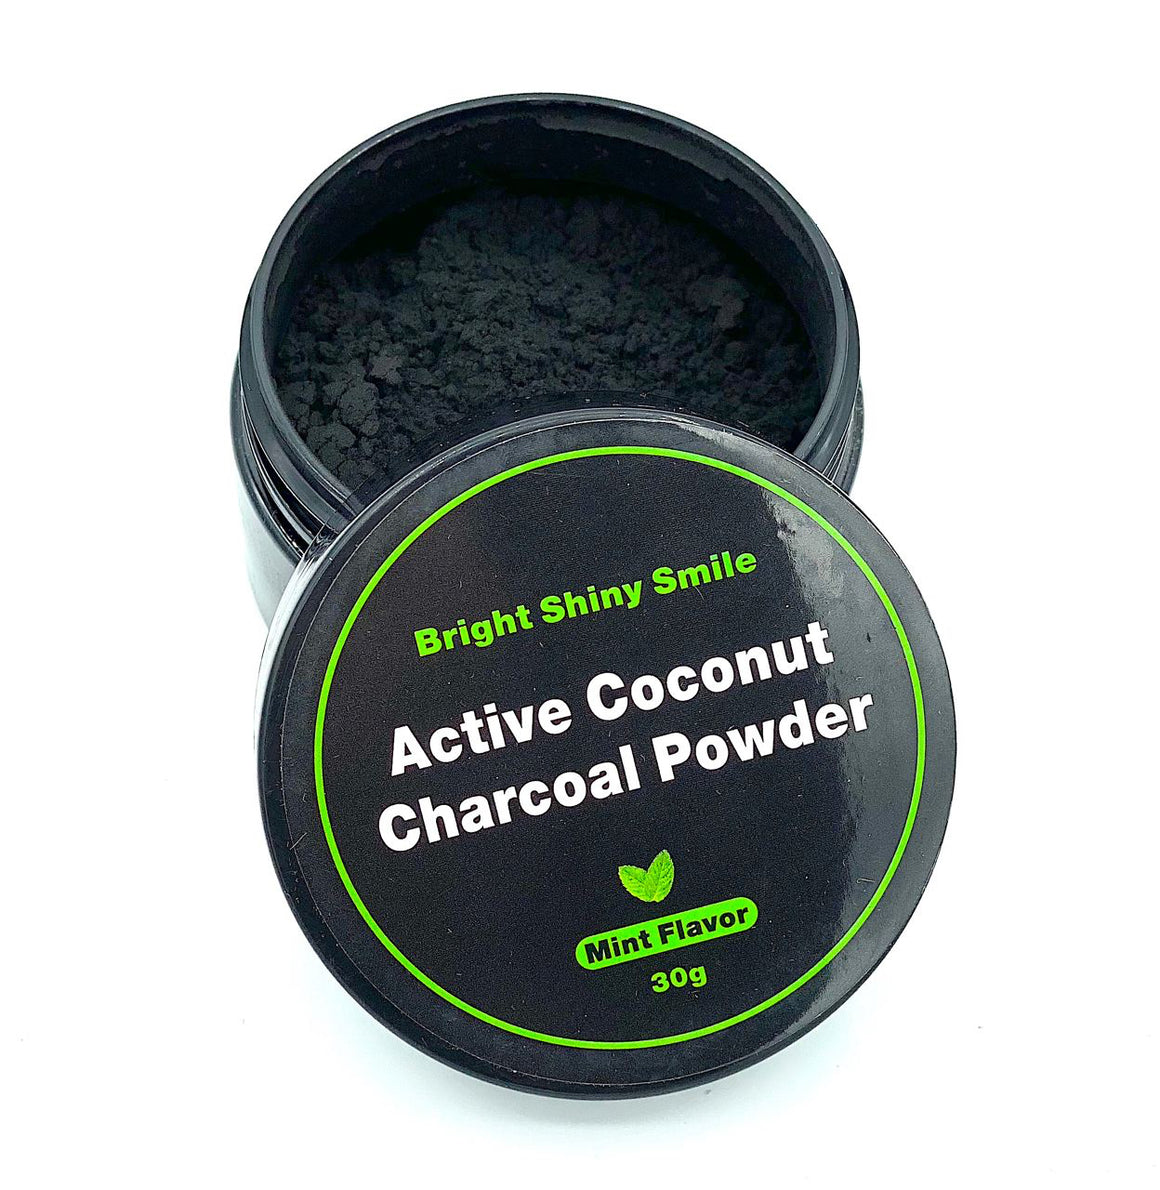 Ative Coconut Charcoal Powder - Beauty Shop Direct